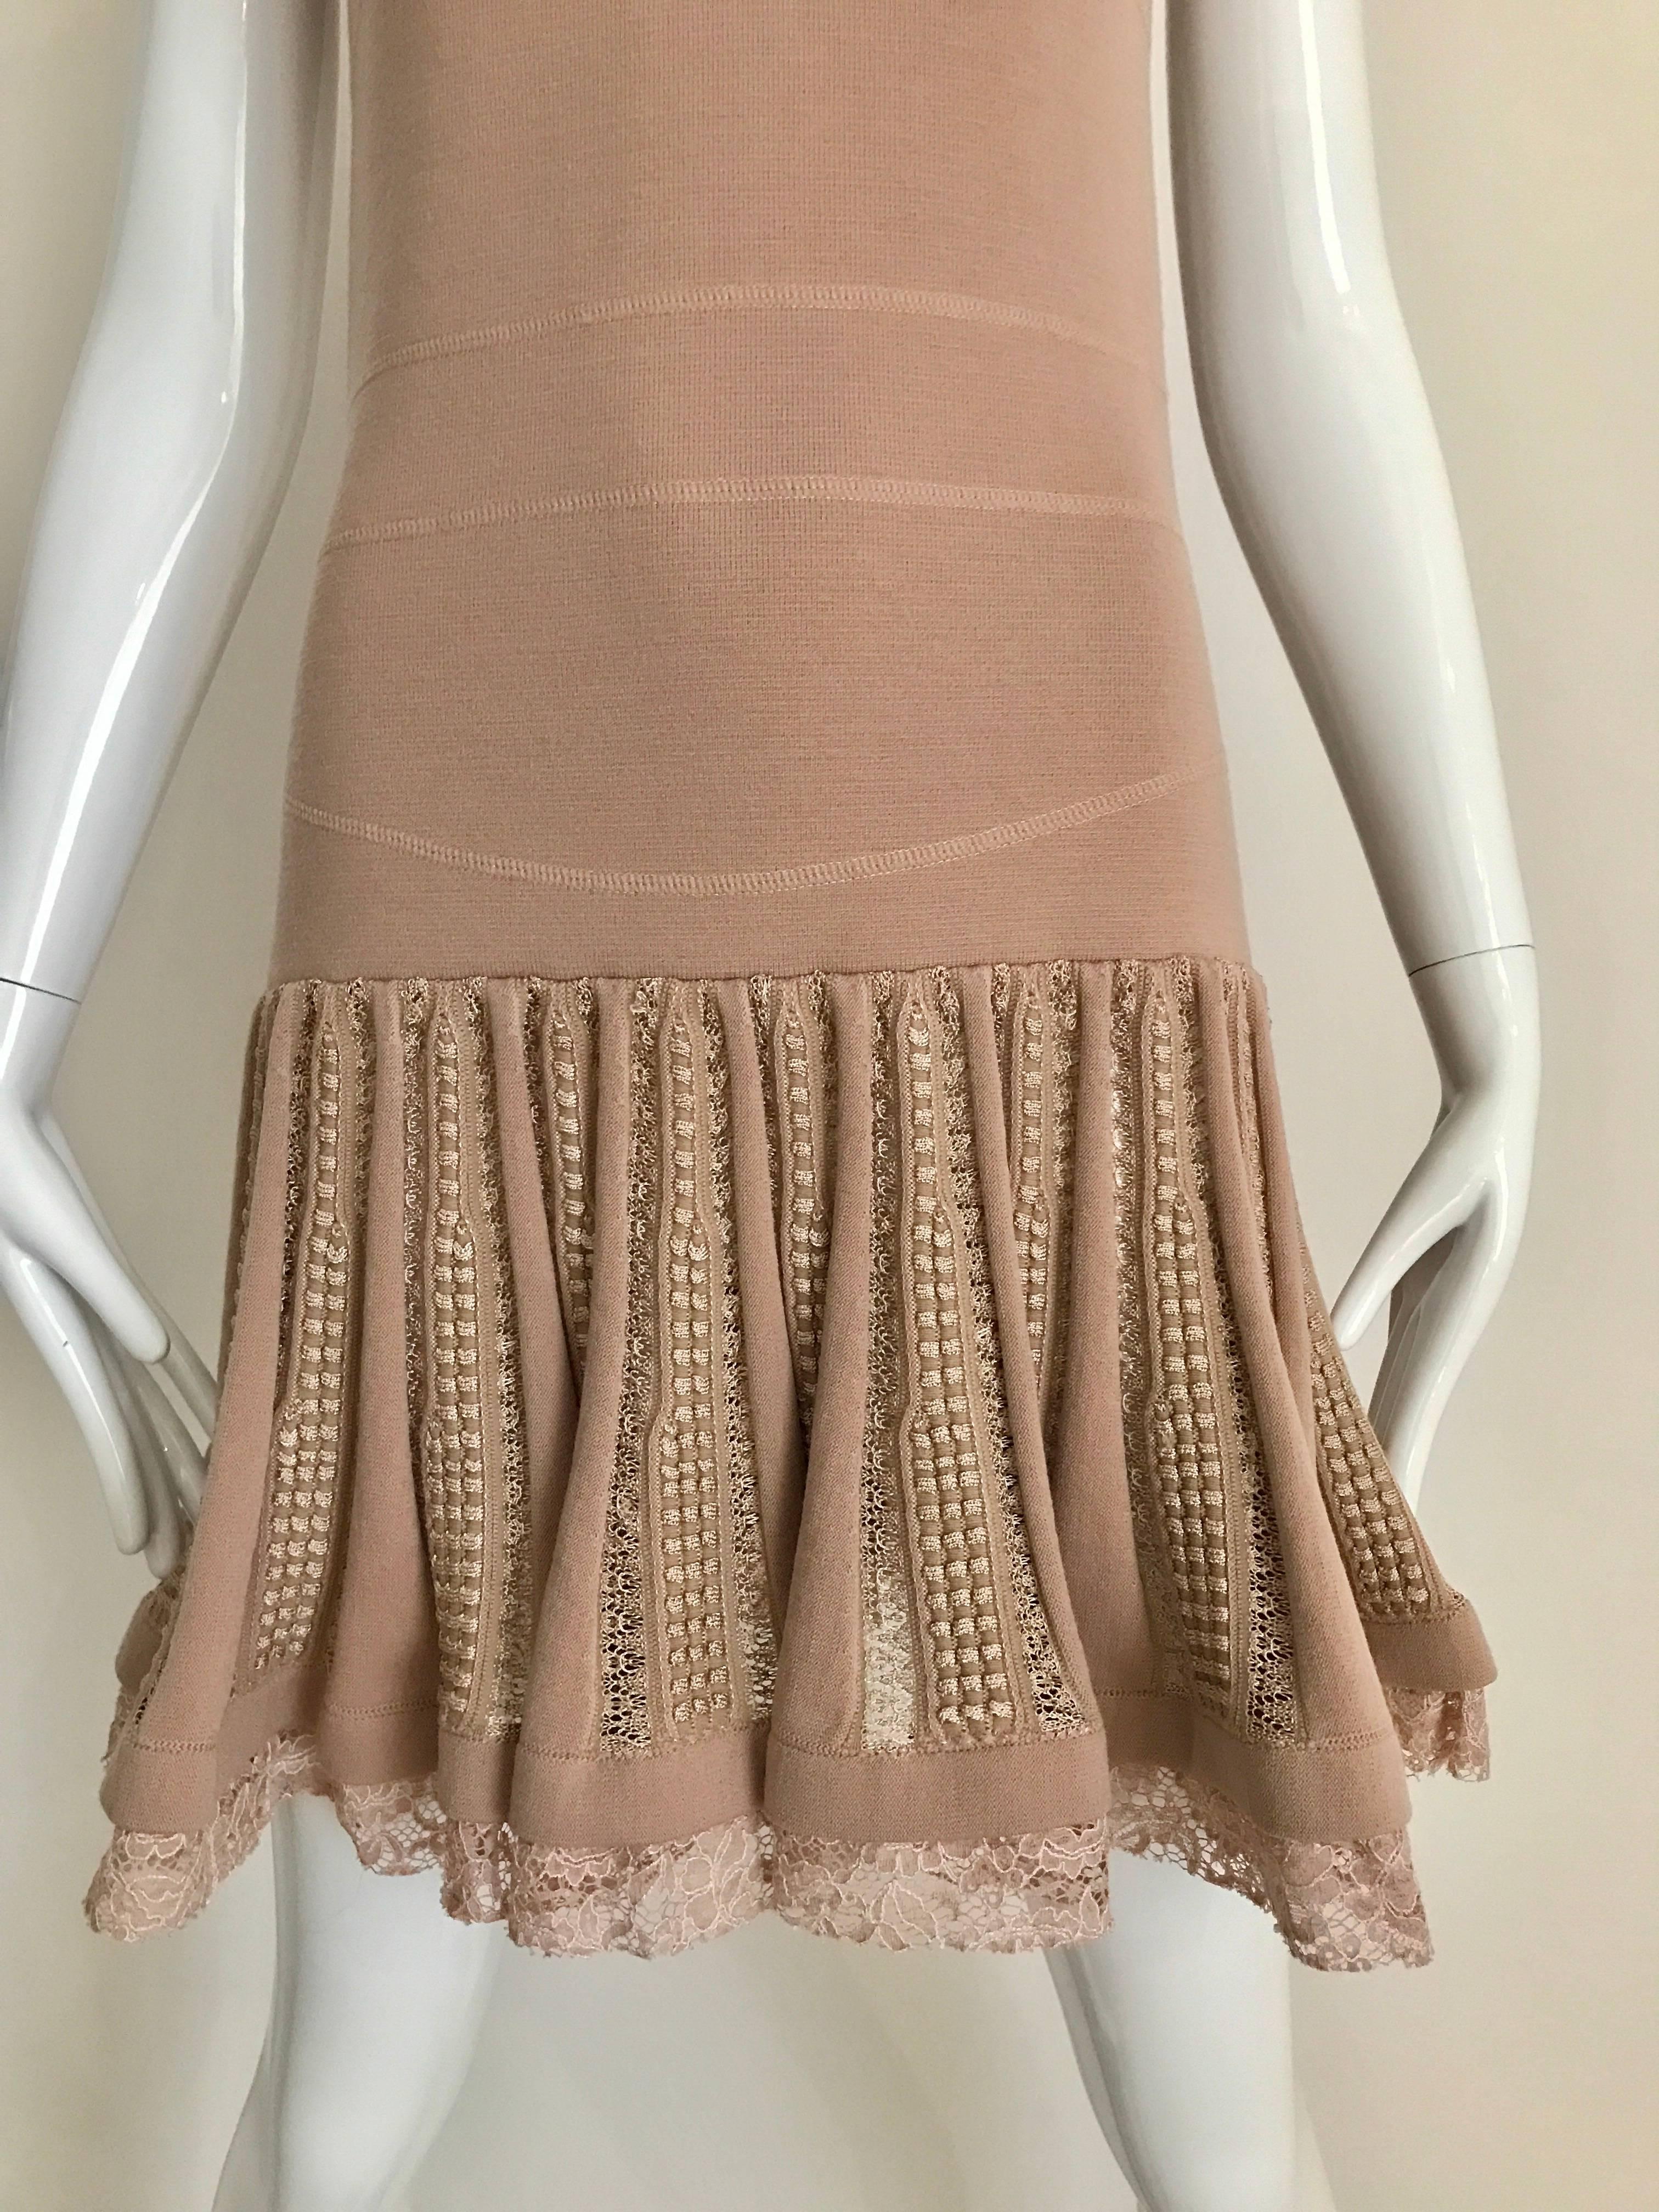 No.21 Alessandro Dell'Acqua Light Mauve Pink Knit Spaghetti Strap Summer Dress In Good Condition For Sale In Beverly Hills, CA